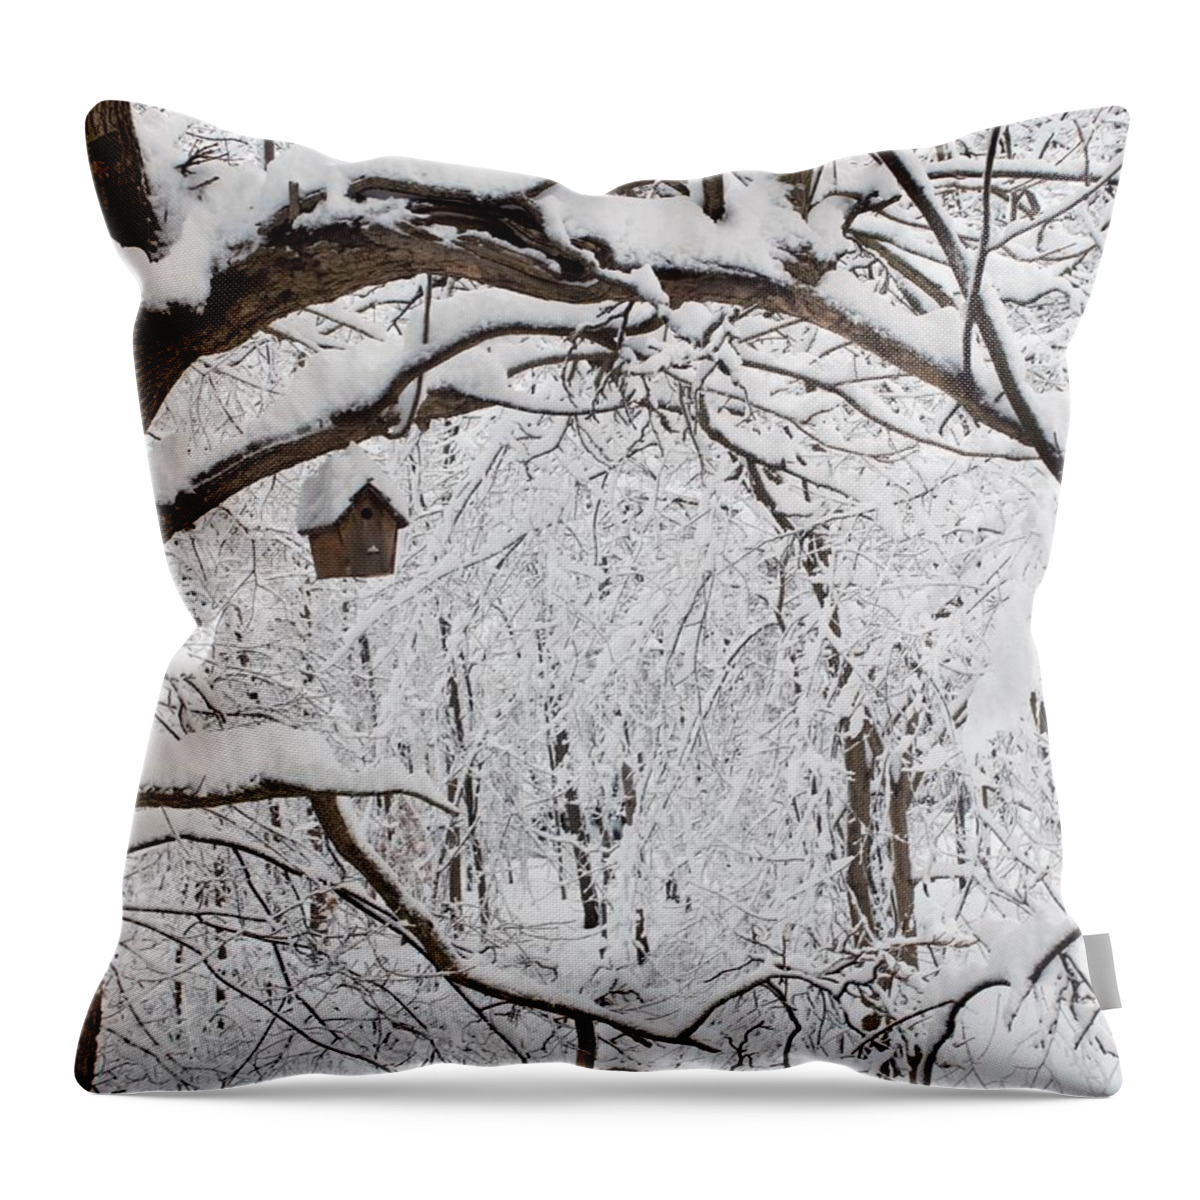 Birdhouse Throw Pillow featuring the photograph Bird House in Snow by R Allen Swezey